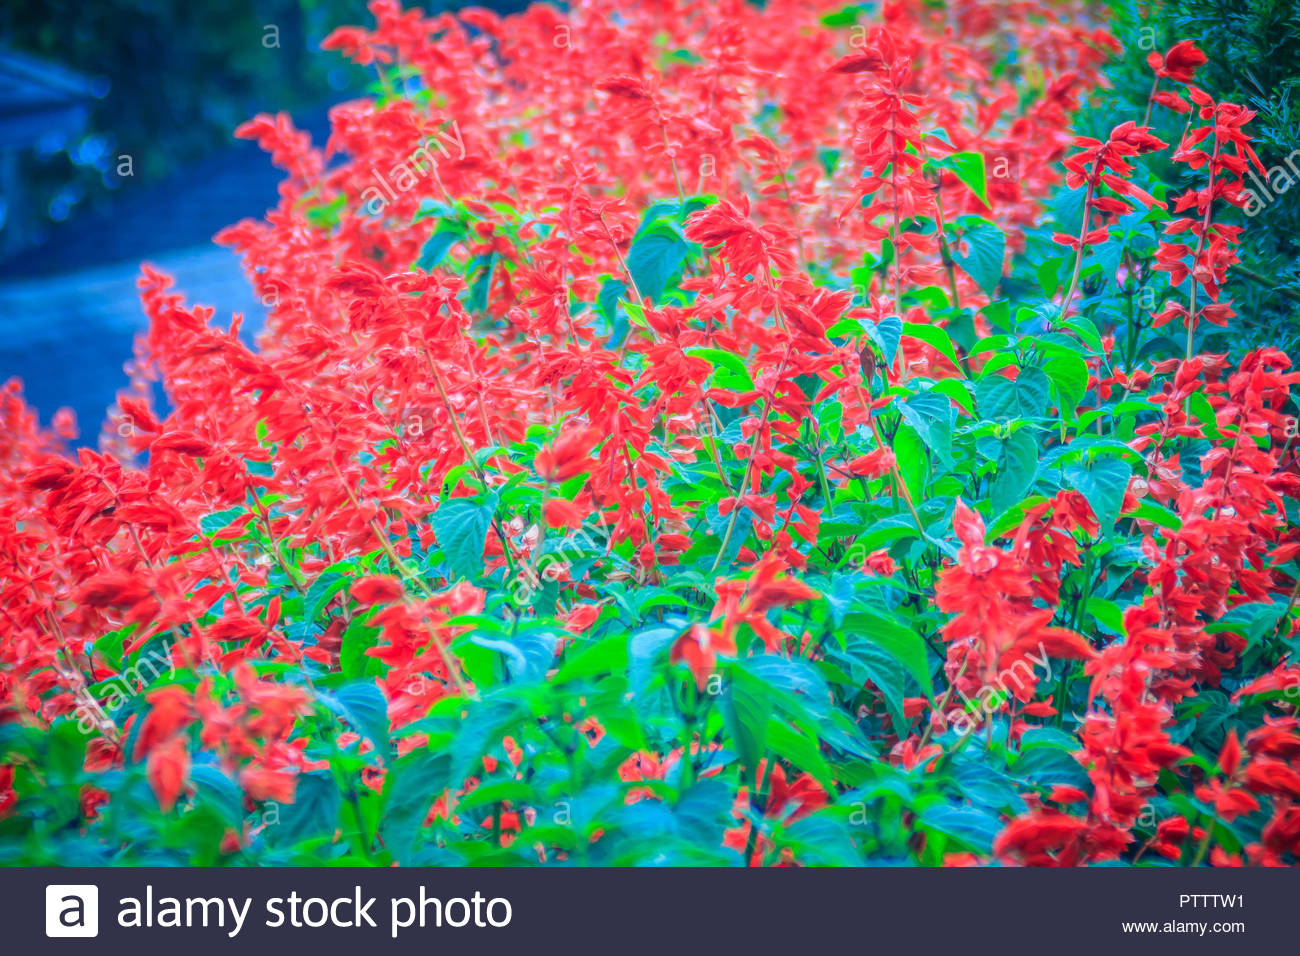 Red Salvia Splendens Bush Background The